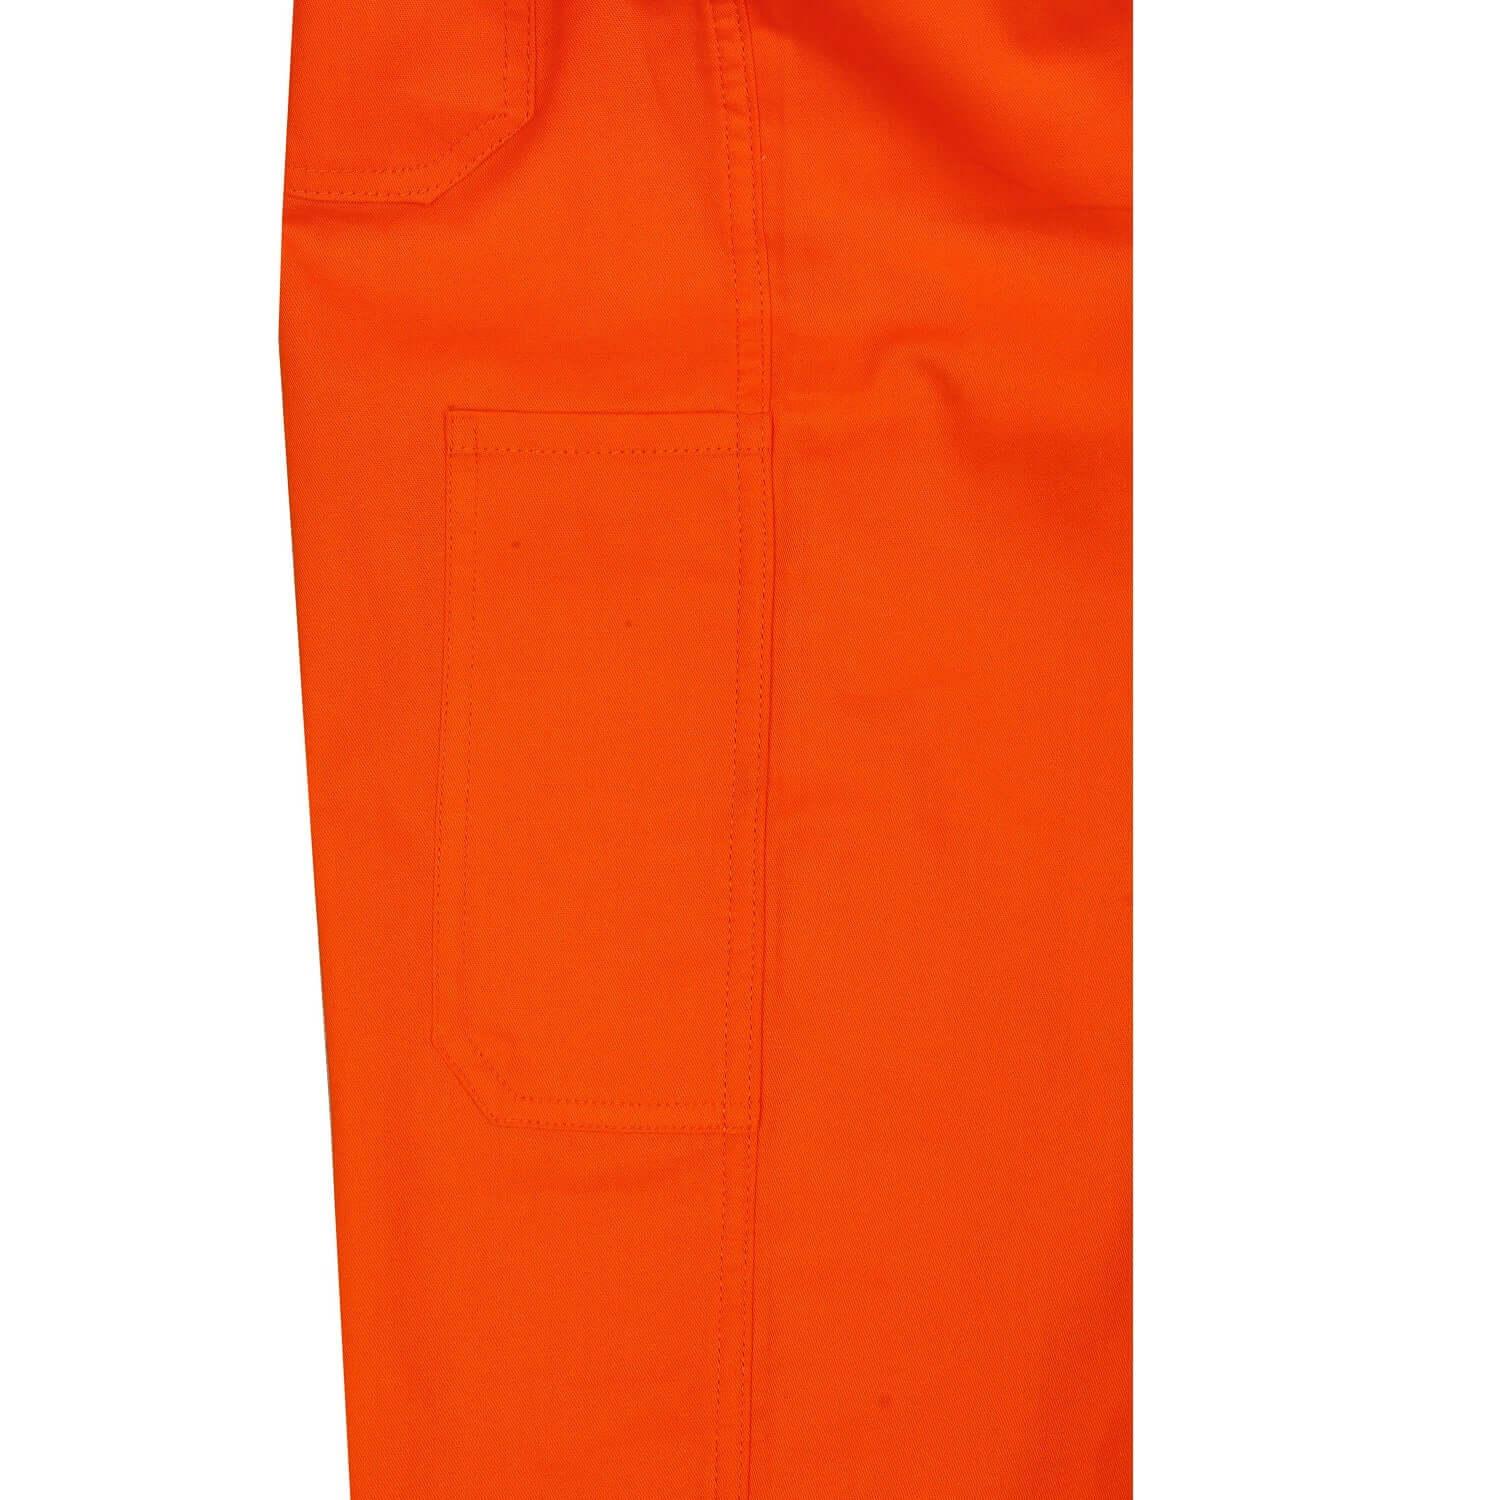 CL01OT12 Leo Workwear  Leo Workwear CL01O Orange HiVis Stain  Resistant Waterproof Hi Vis Trousers 74  82cm Waist Size  2604287  RS  Components